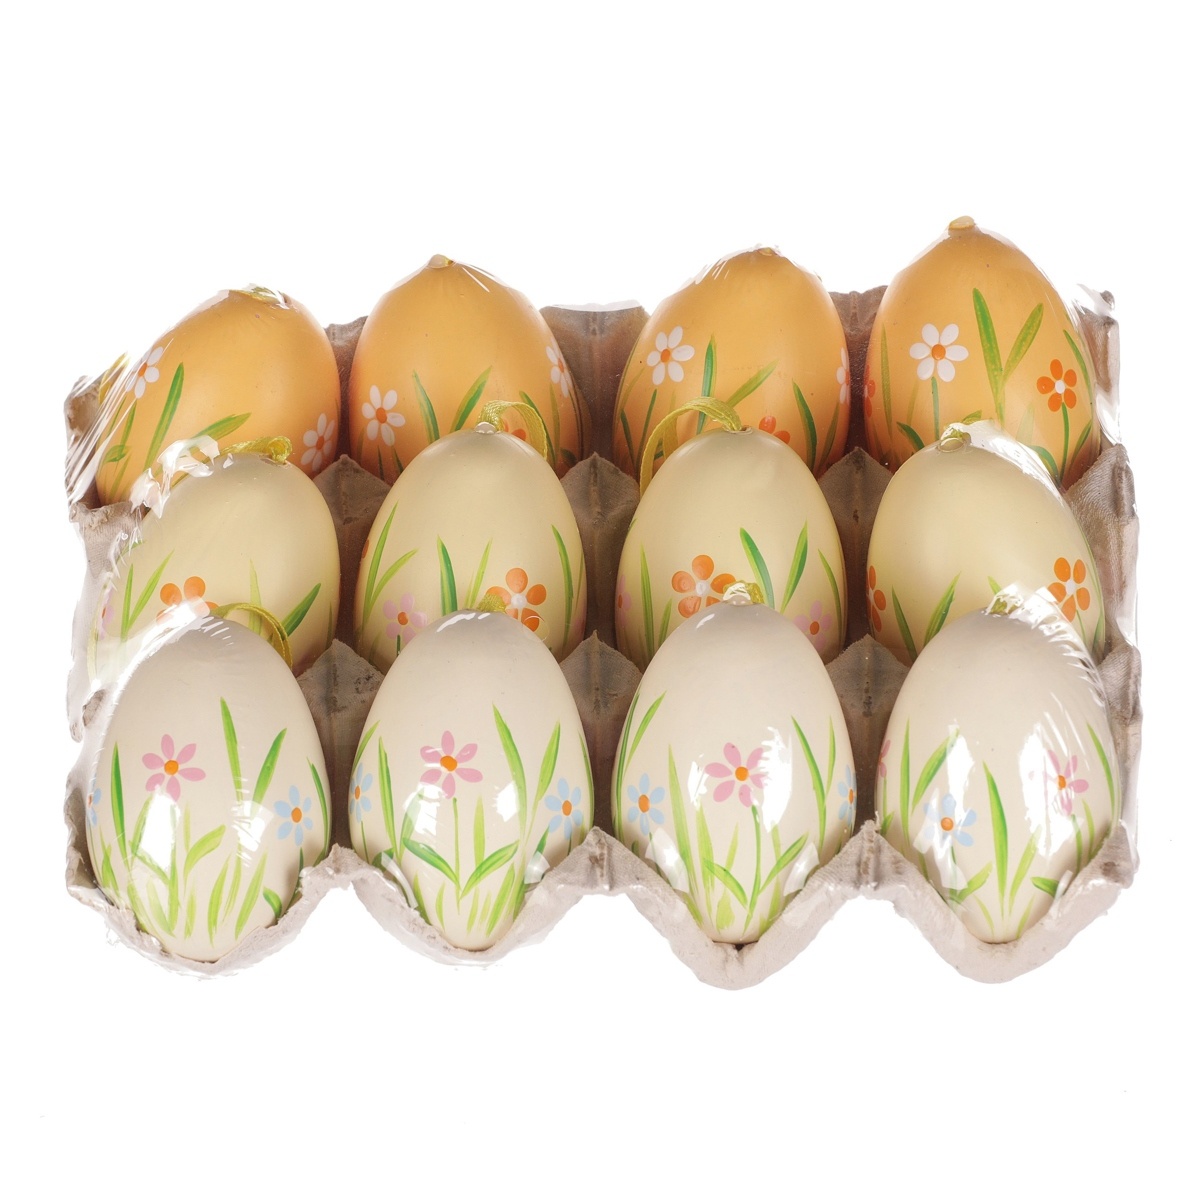 Sada umělých malovaných vajíček hnědo-bílá